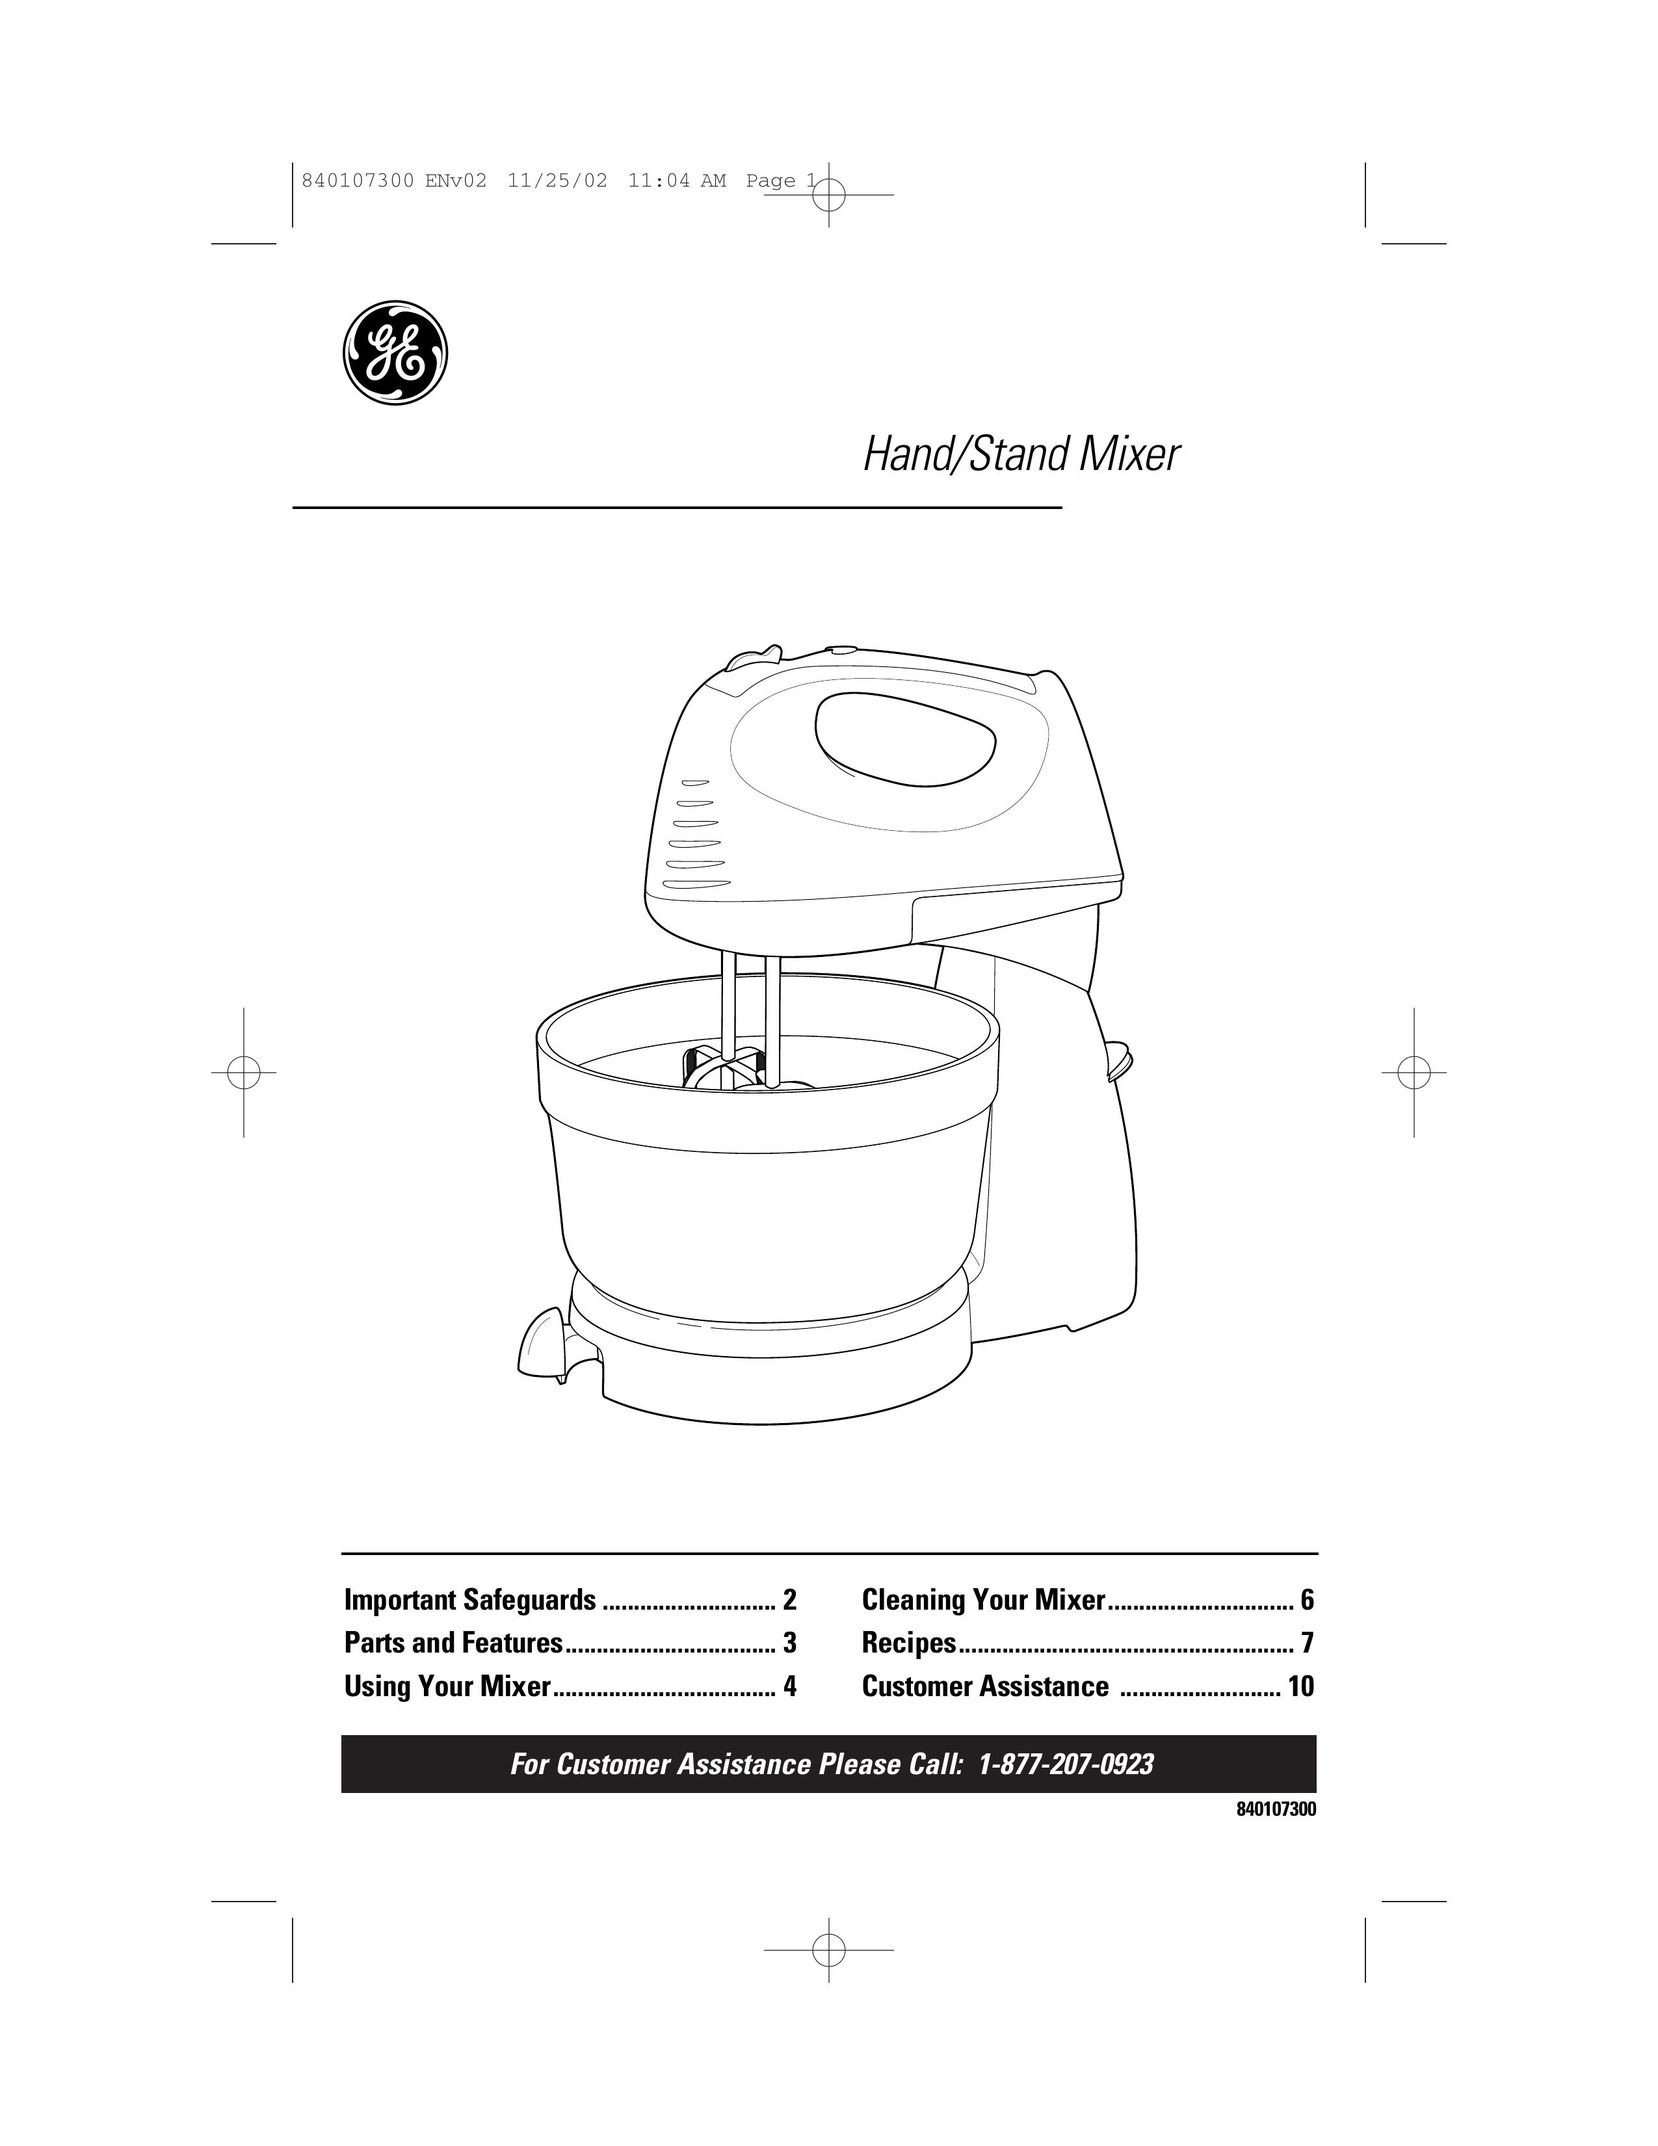 GE 840107300 Mixer User Manual